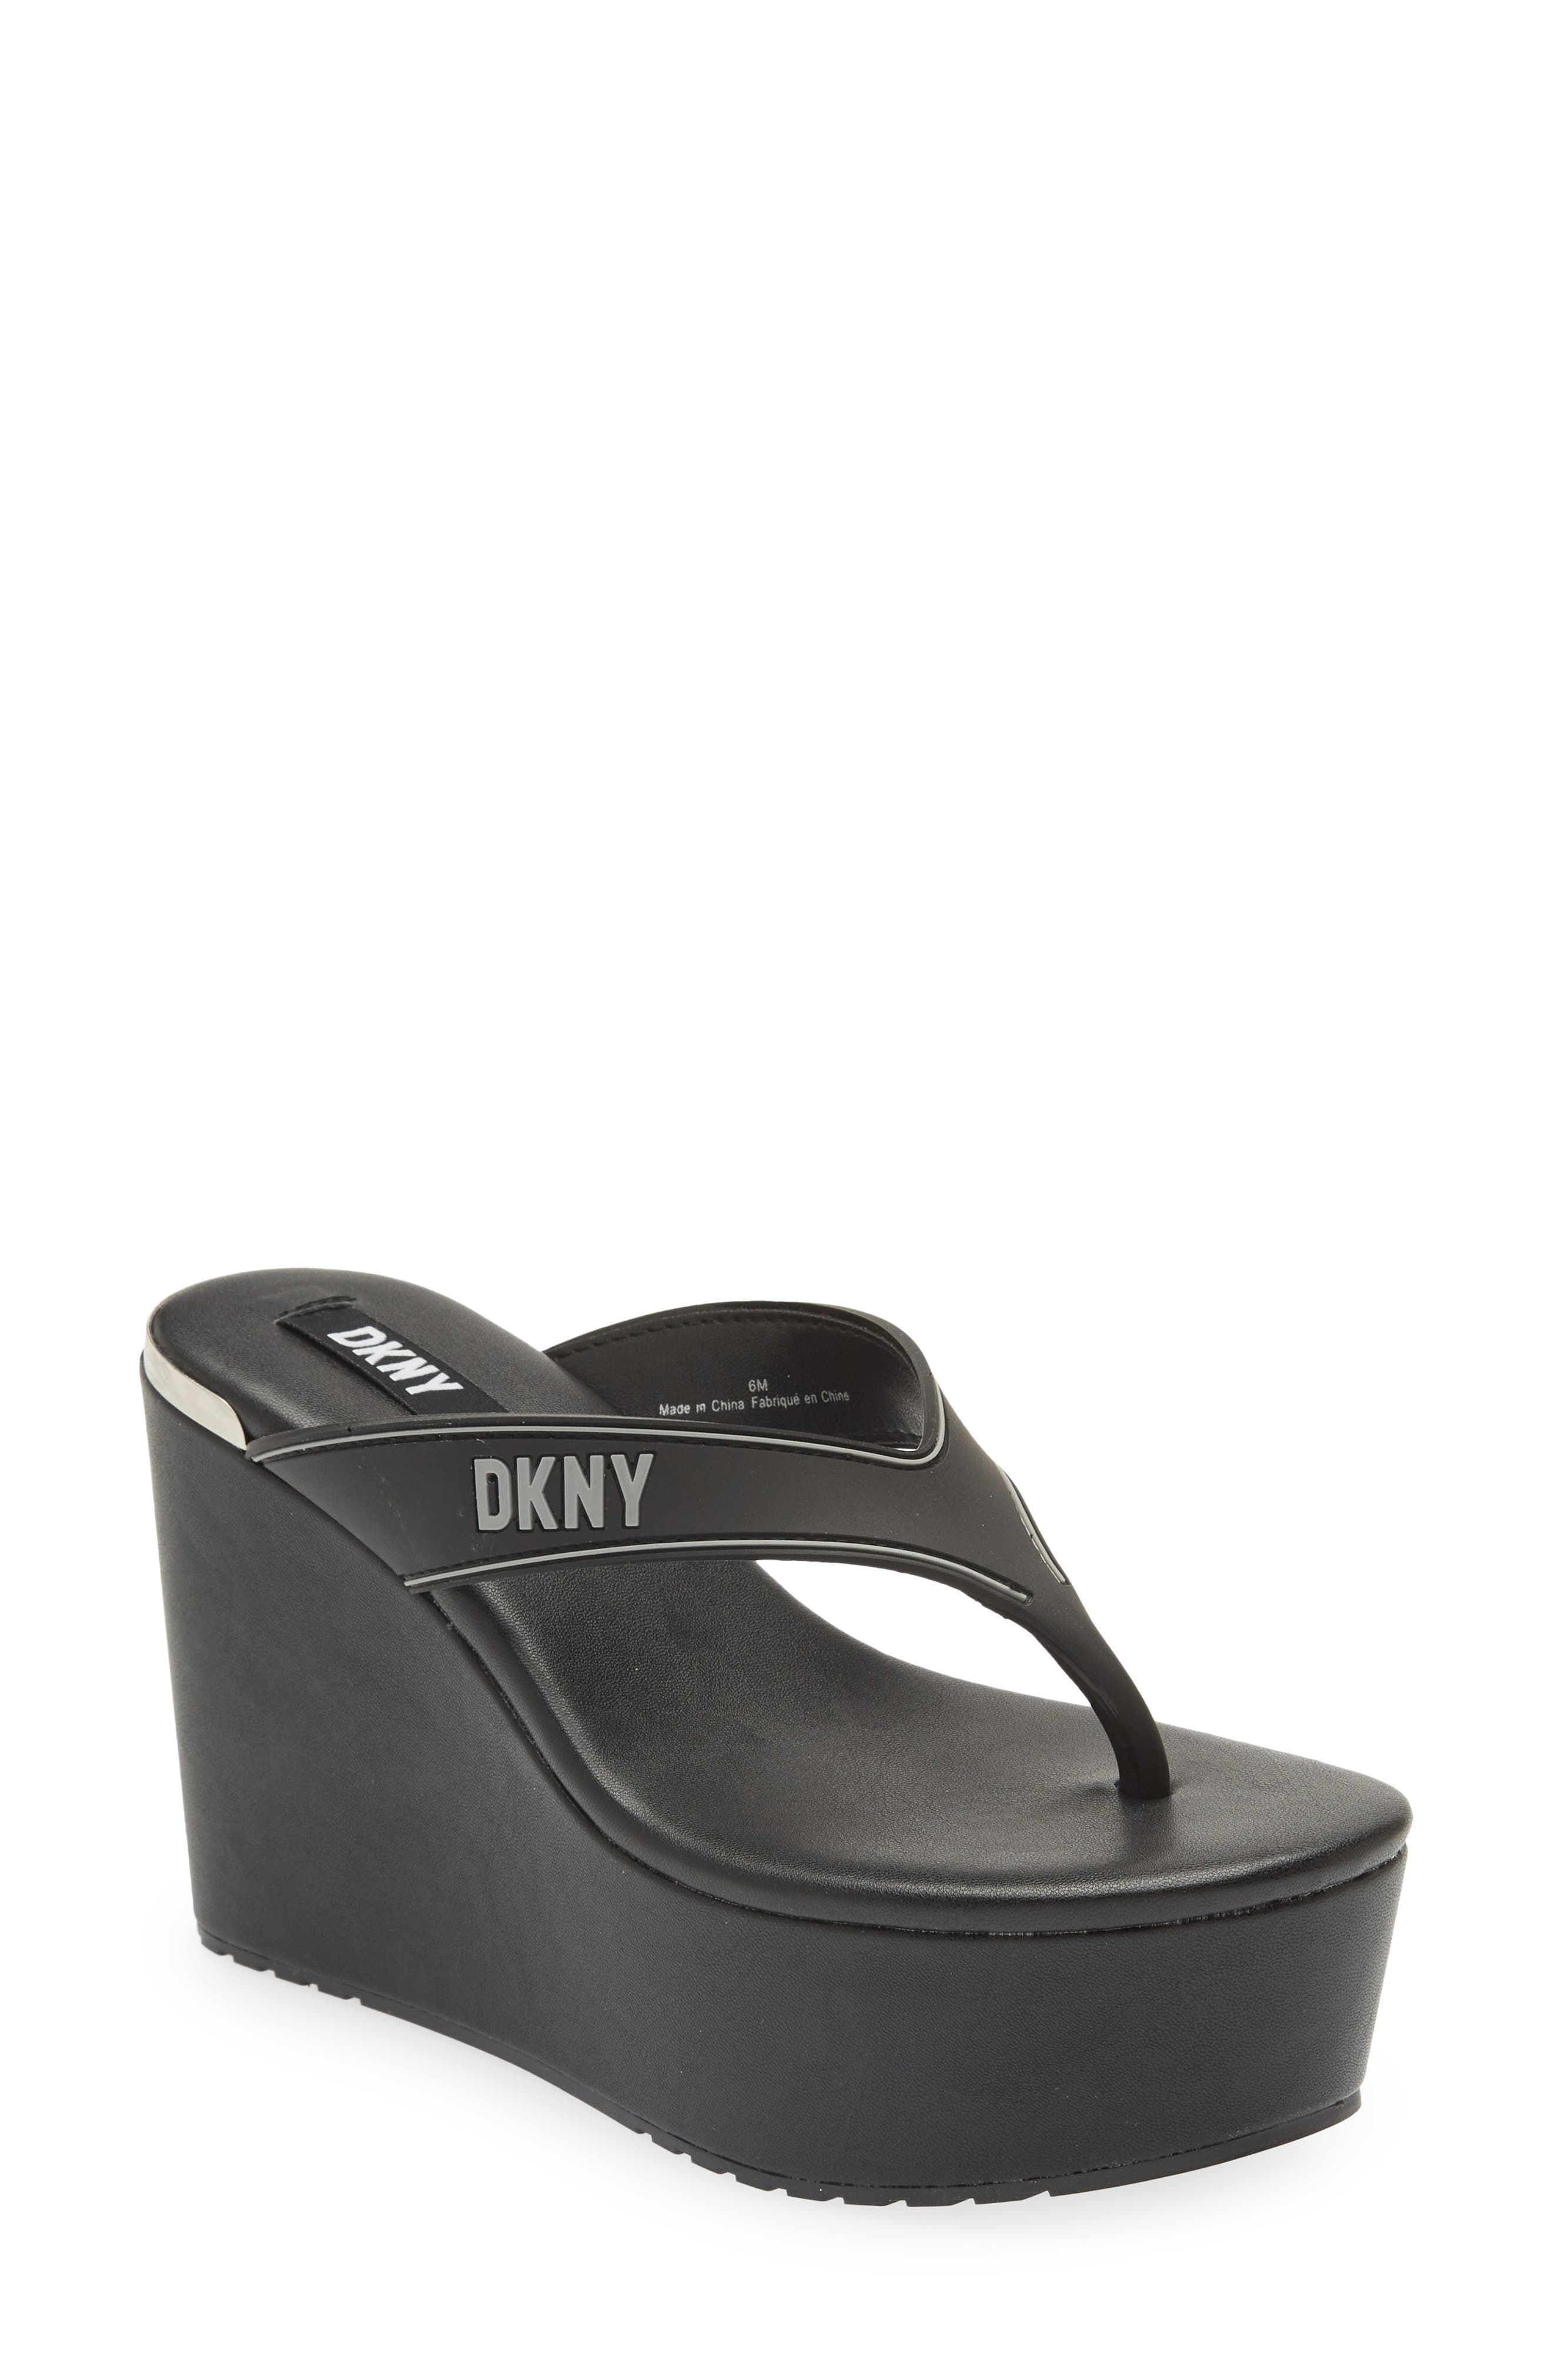 DKNY Women's Shoe Sz 9 (US Women's) TRA Thong Sandals Wedge Heels Black